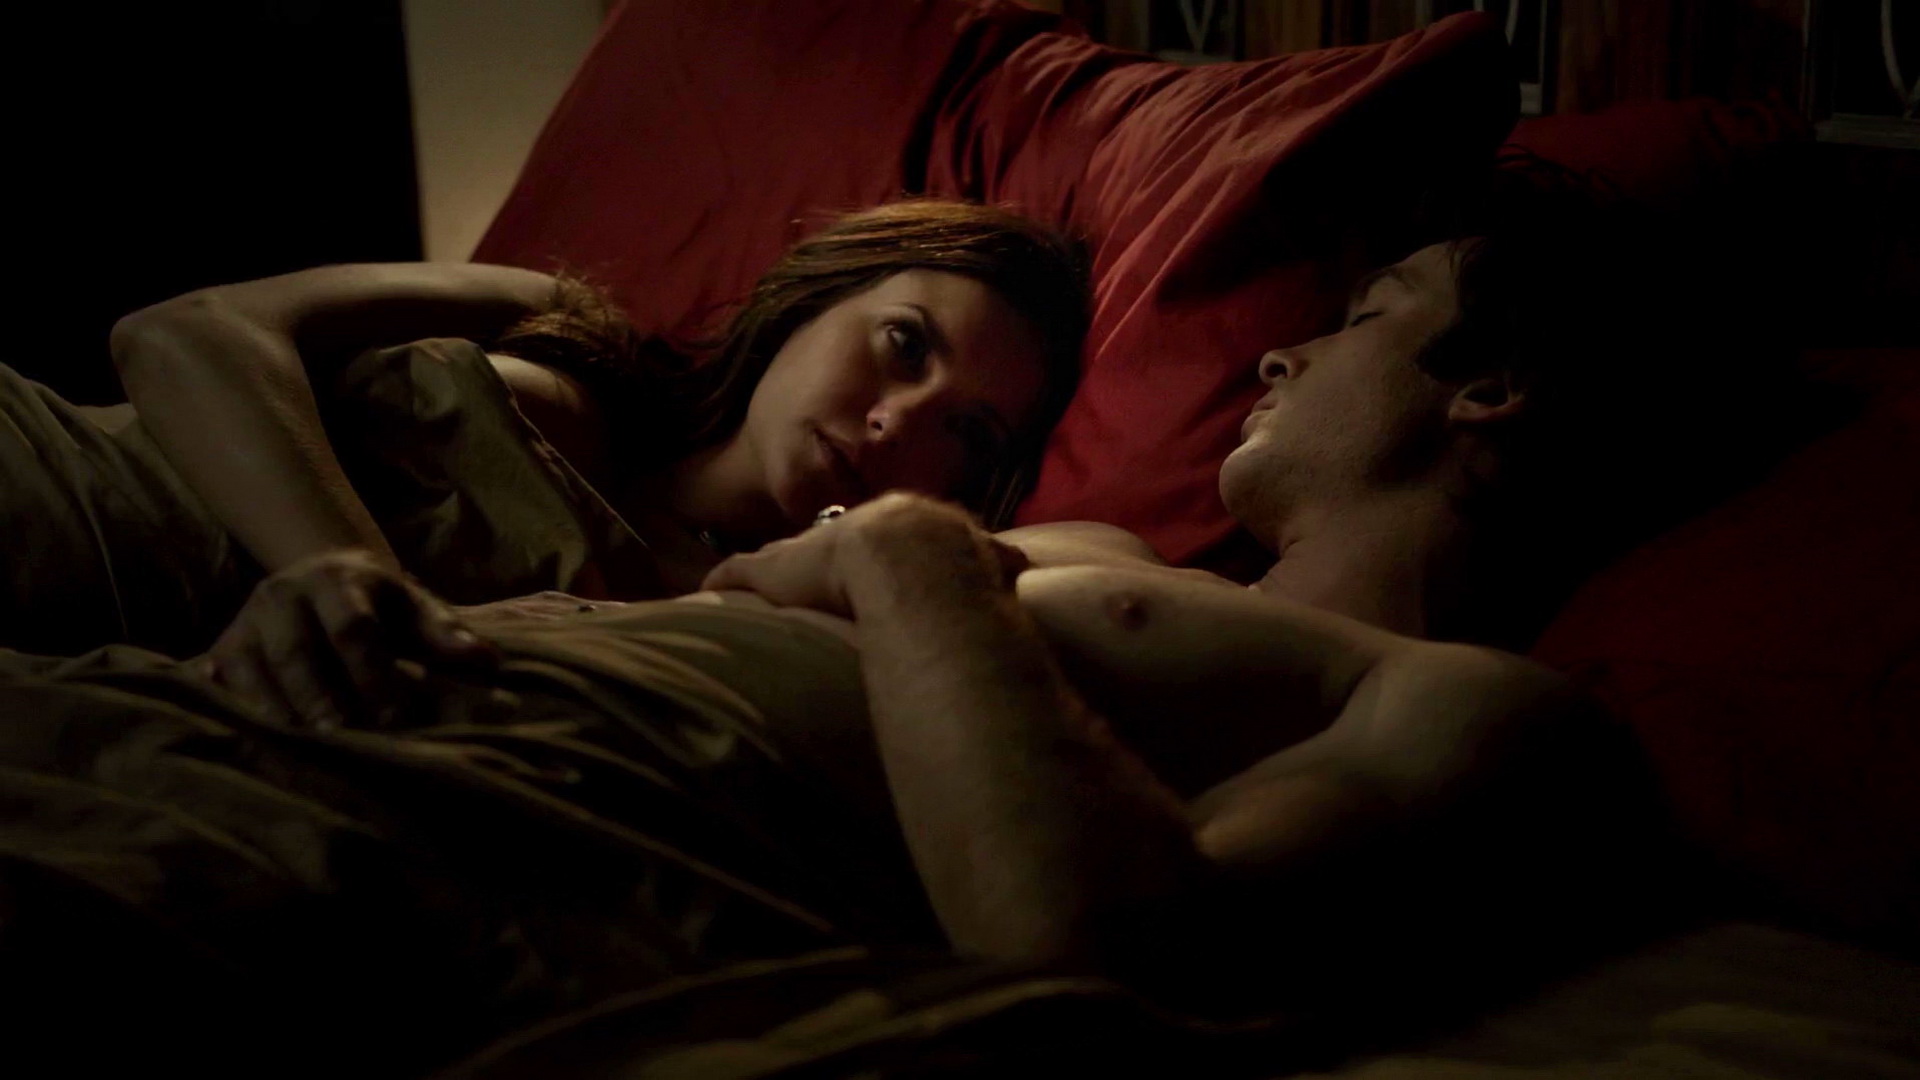 Nina Dobrev, Candice Accola - The Vampire Diaries s06e13-17 (2015) HD 1080p